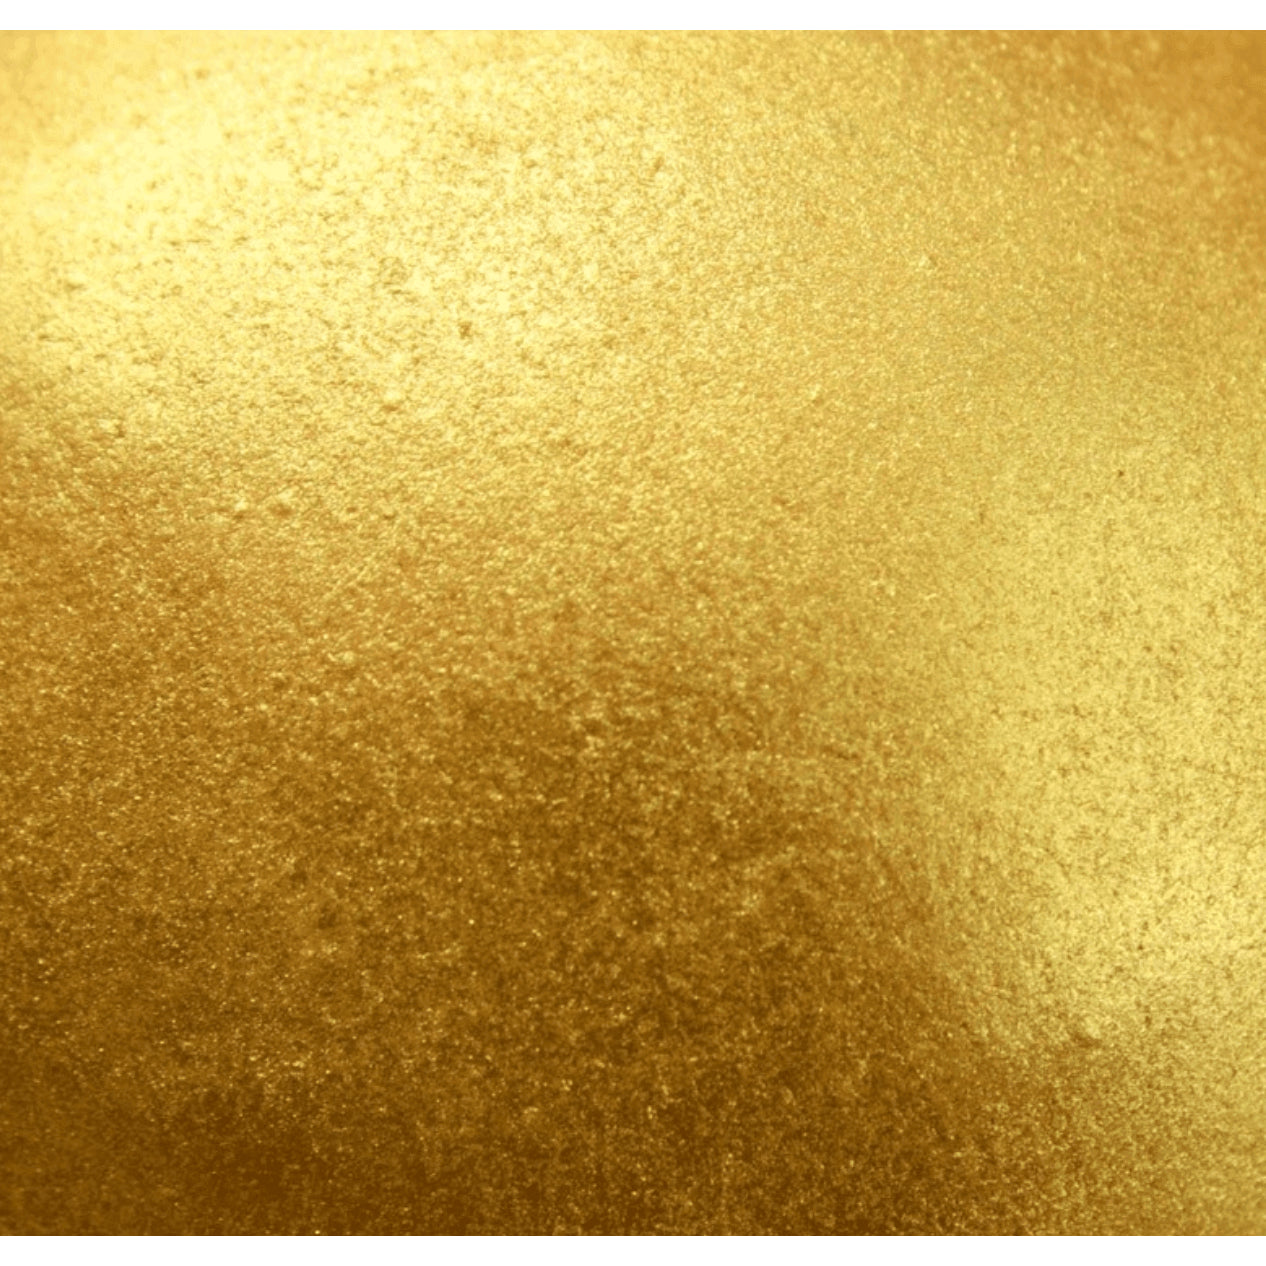 Powder coloring - Signature Gold